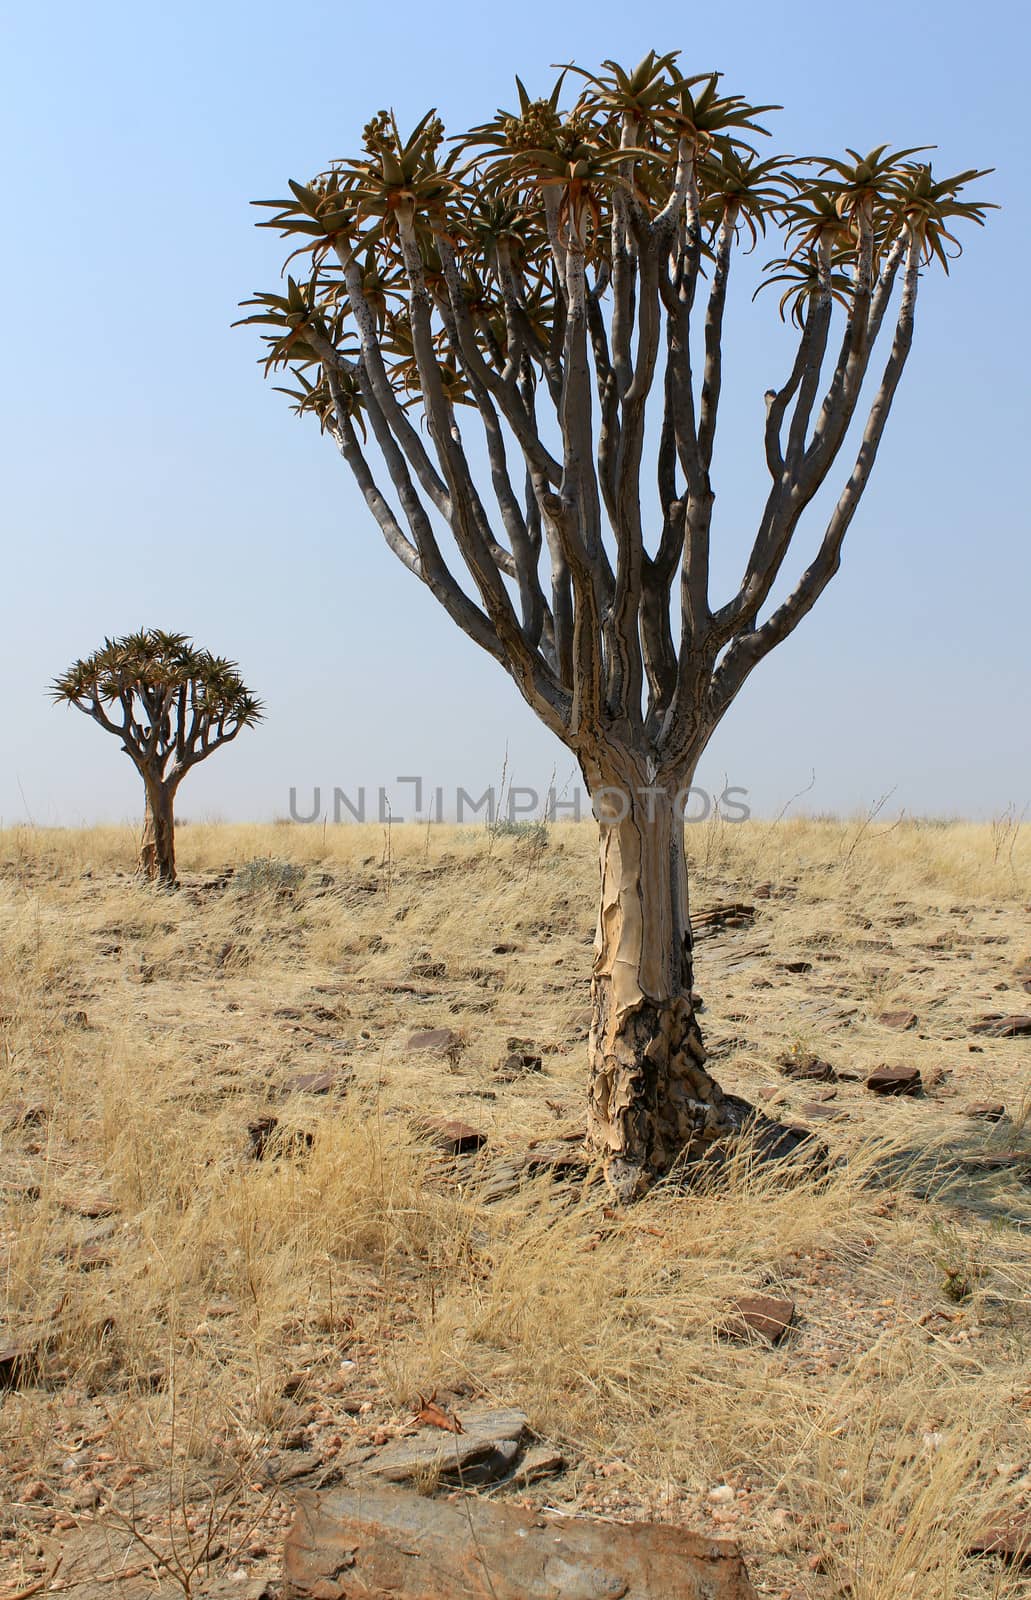 Quiver tree (Aloe dichotoma) in the Namib desert landscape by ptxgarfield